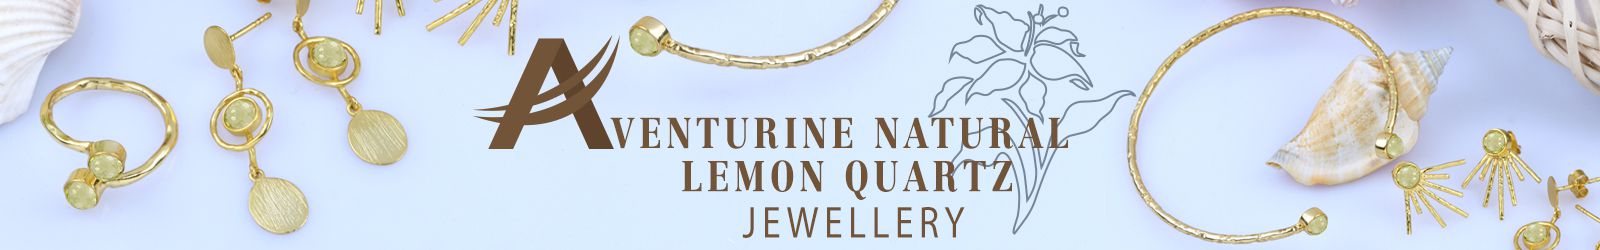 Silver Aventurine Natural Lemon Quartz Jewelry Wholesale Supplier